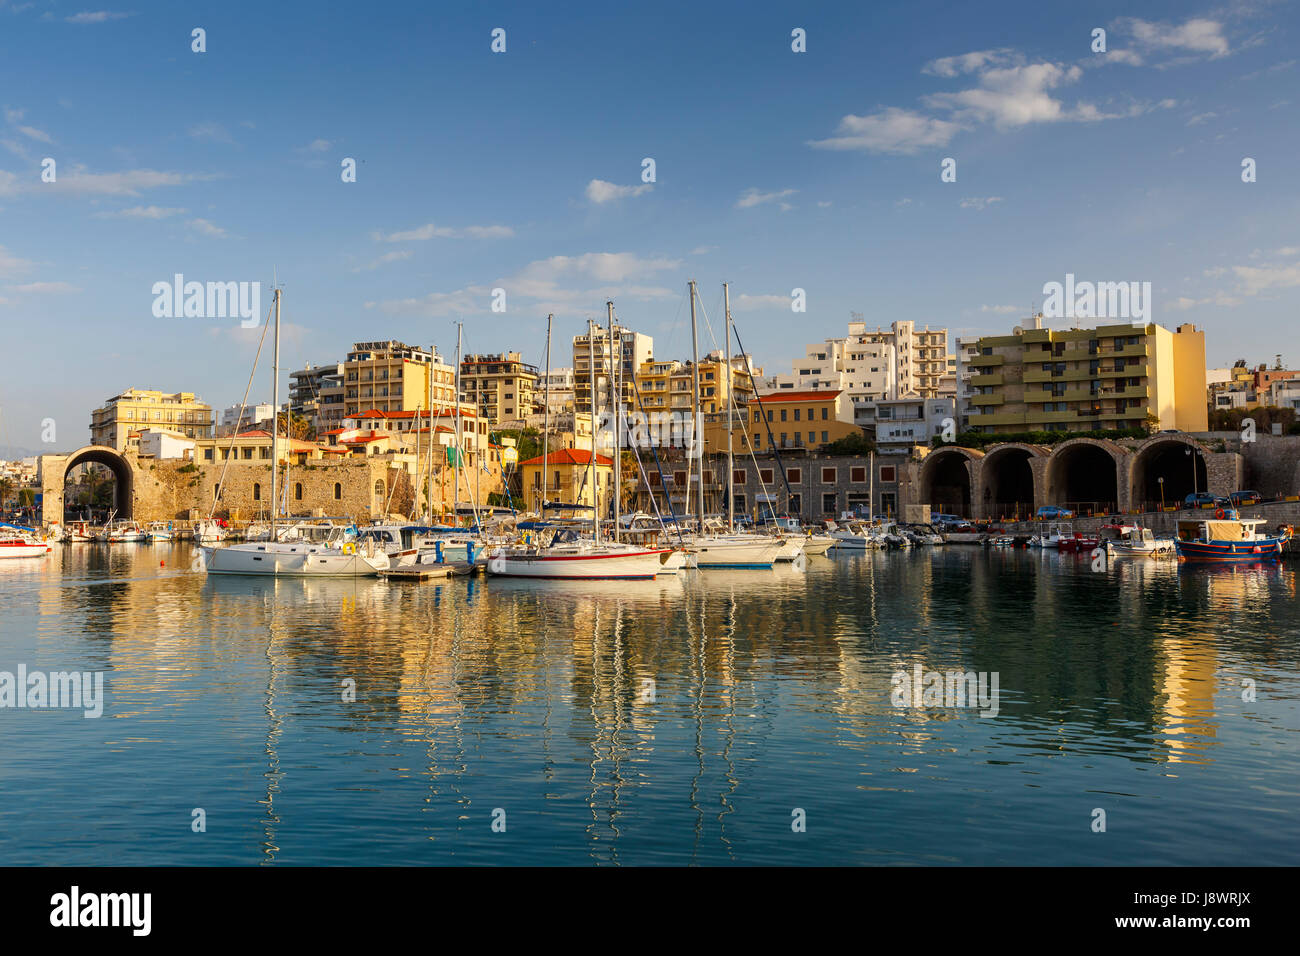 Old Venetian harbor in Heraklion, Crete, Greece. Stock Photo